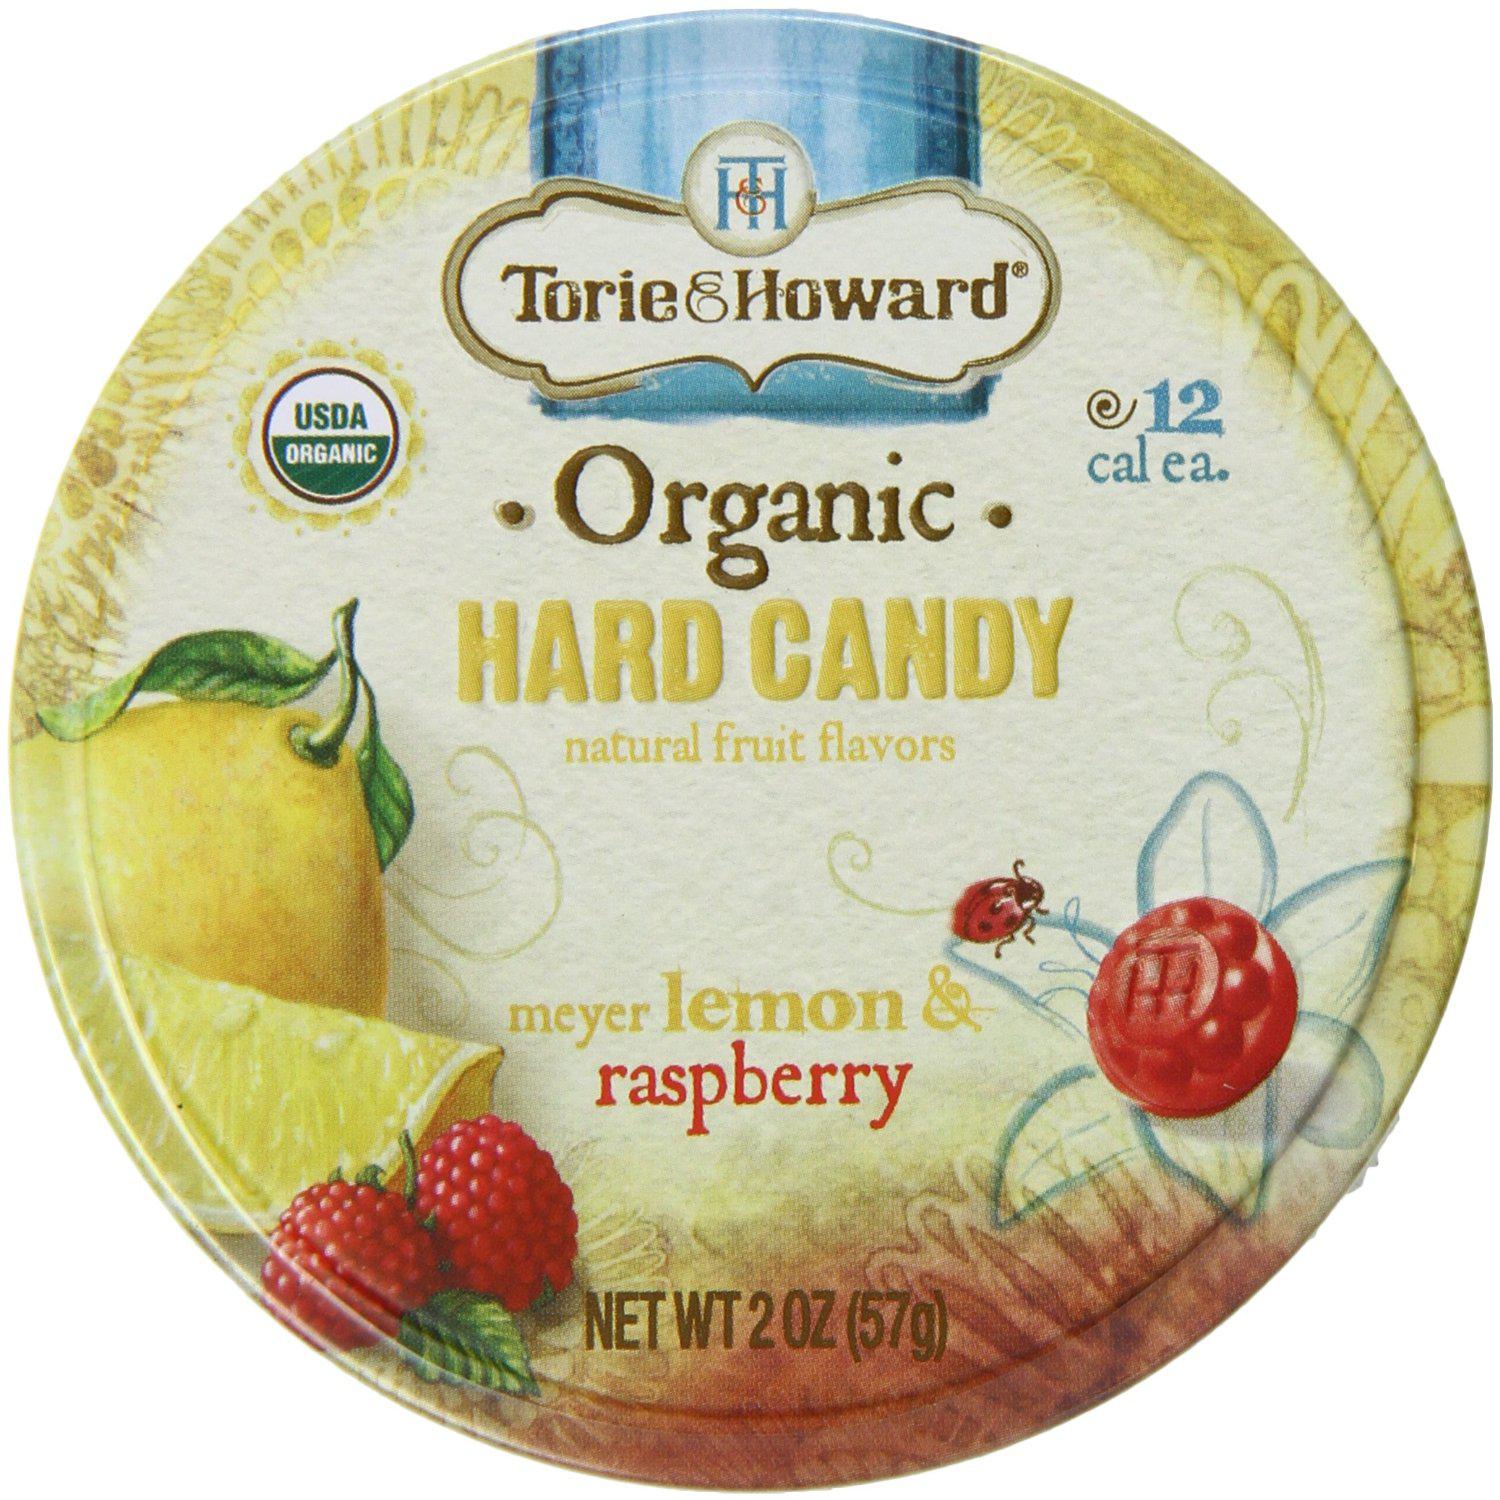 yz g[&n[h I[KjbN n[hLfB &Yx[ 56gyTorie&HowardzOrganic Hard Candy Lemon&Raspberry 2oz